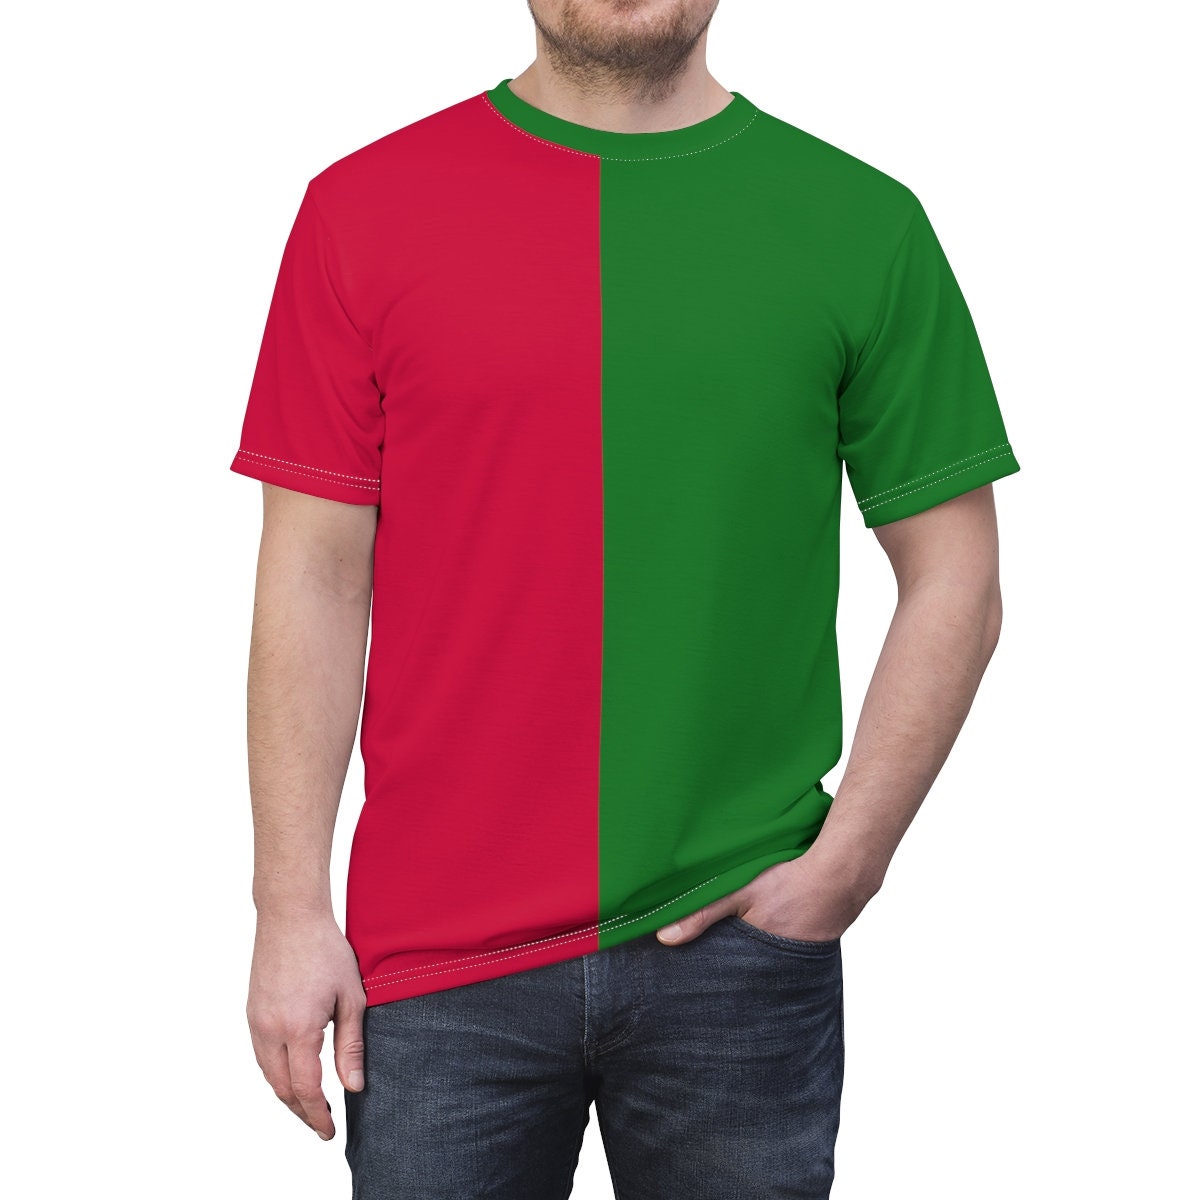 Unisex Split T-shirt Red & Green Adult Shirt - Etsy